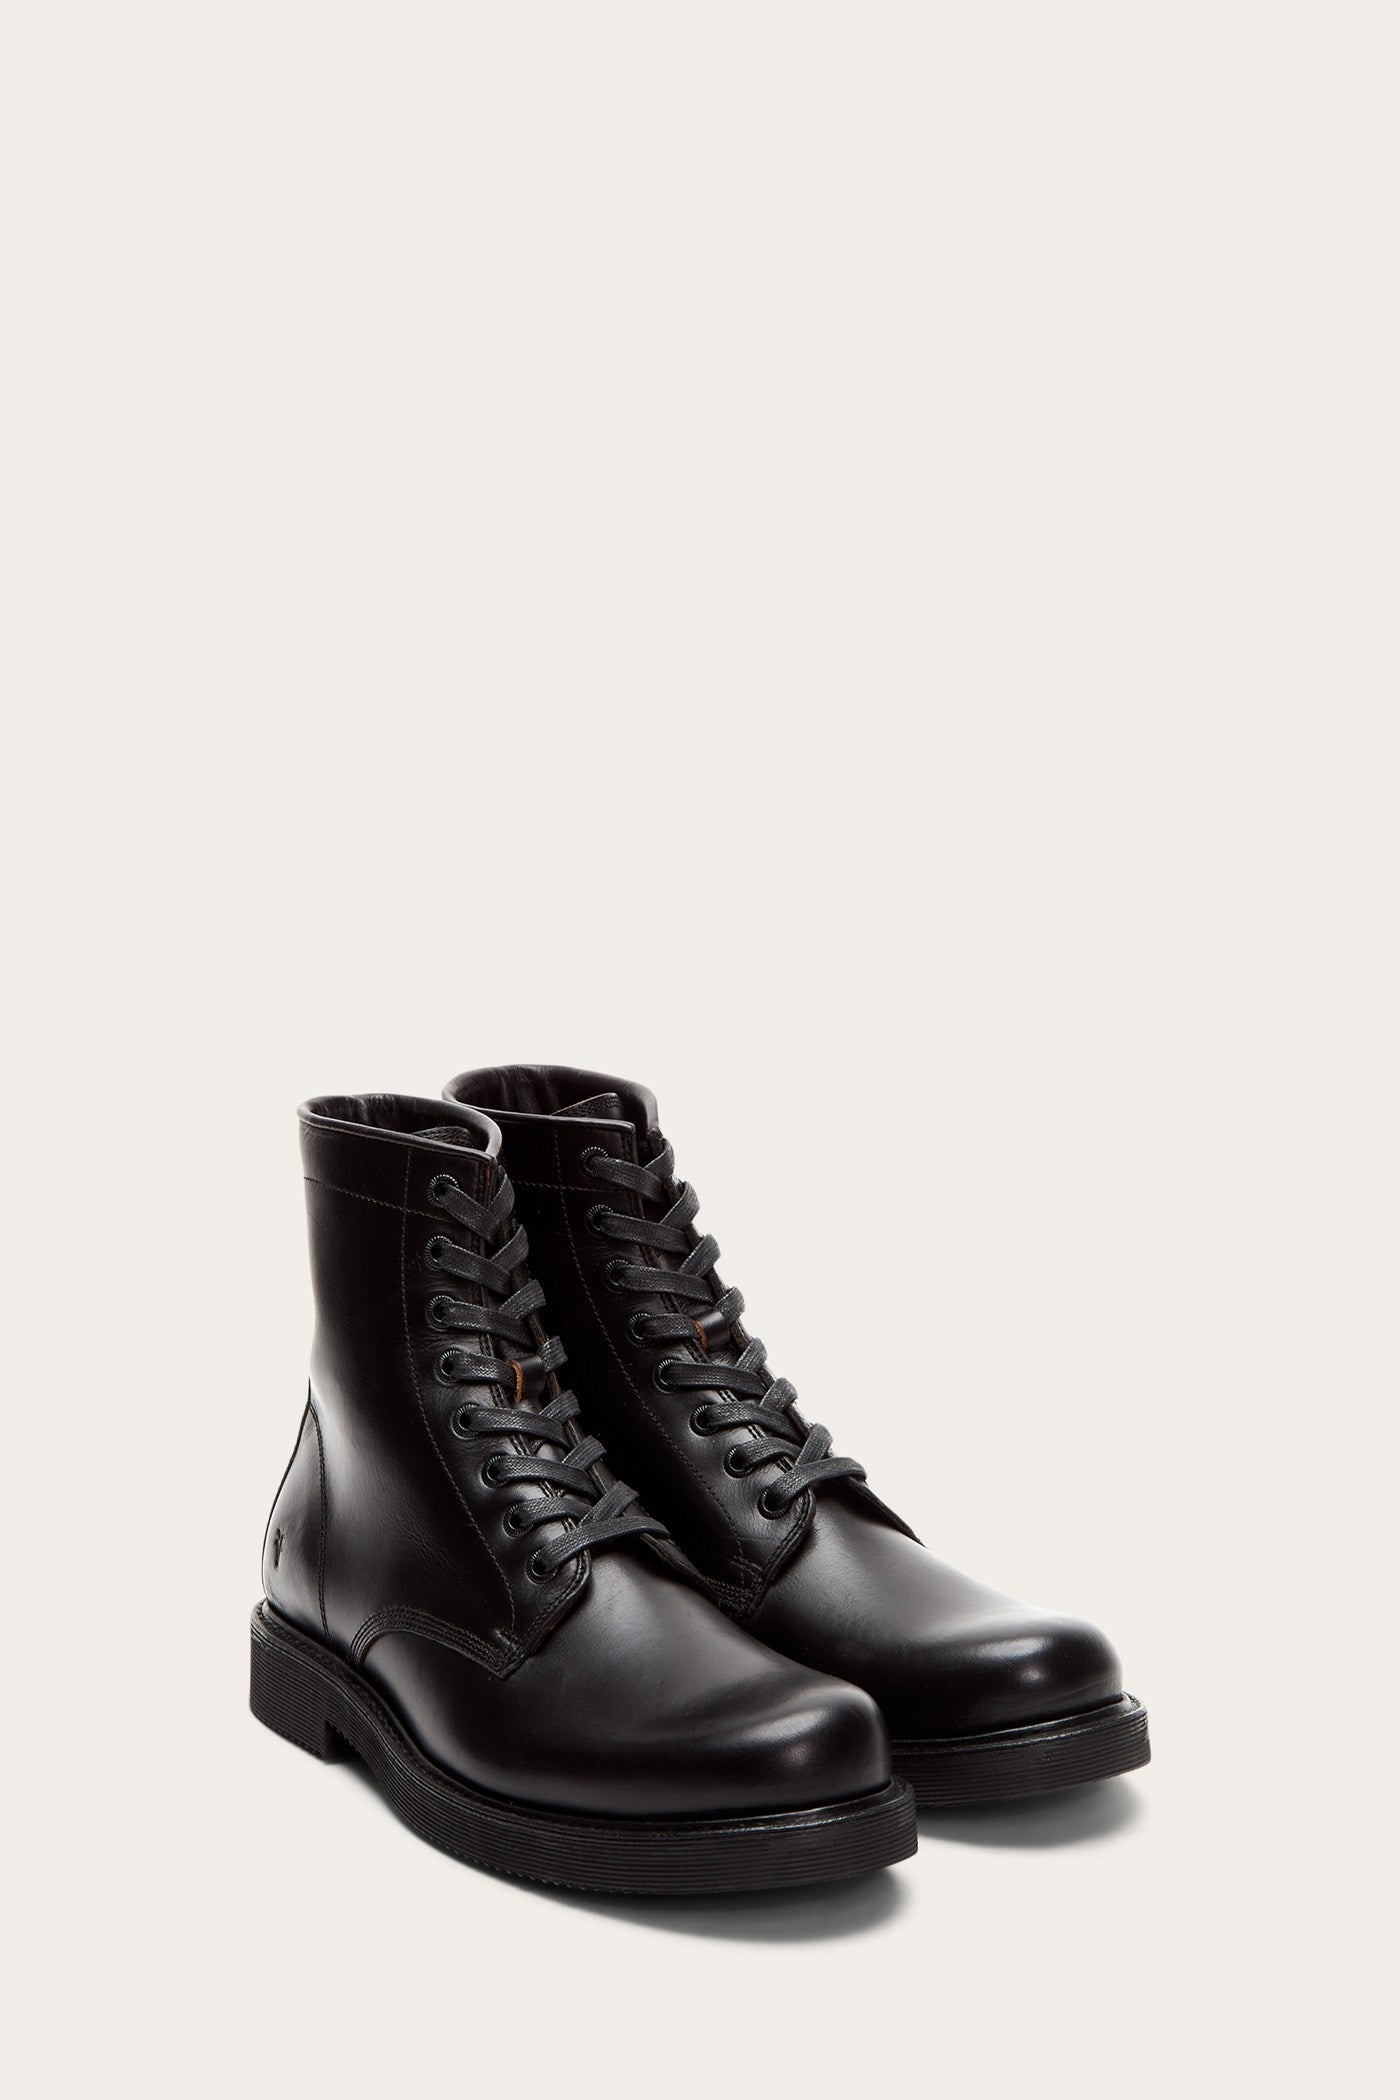 frye combat boots